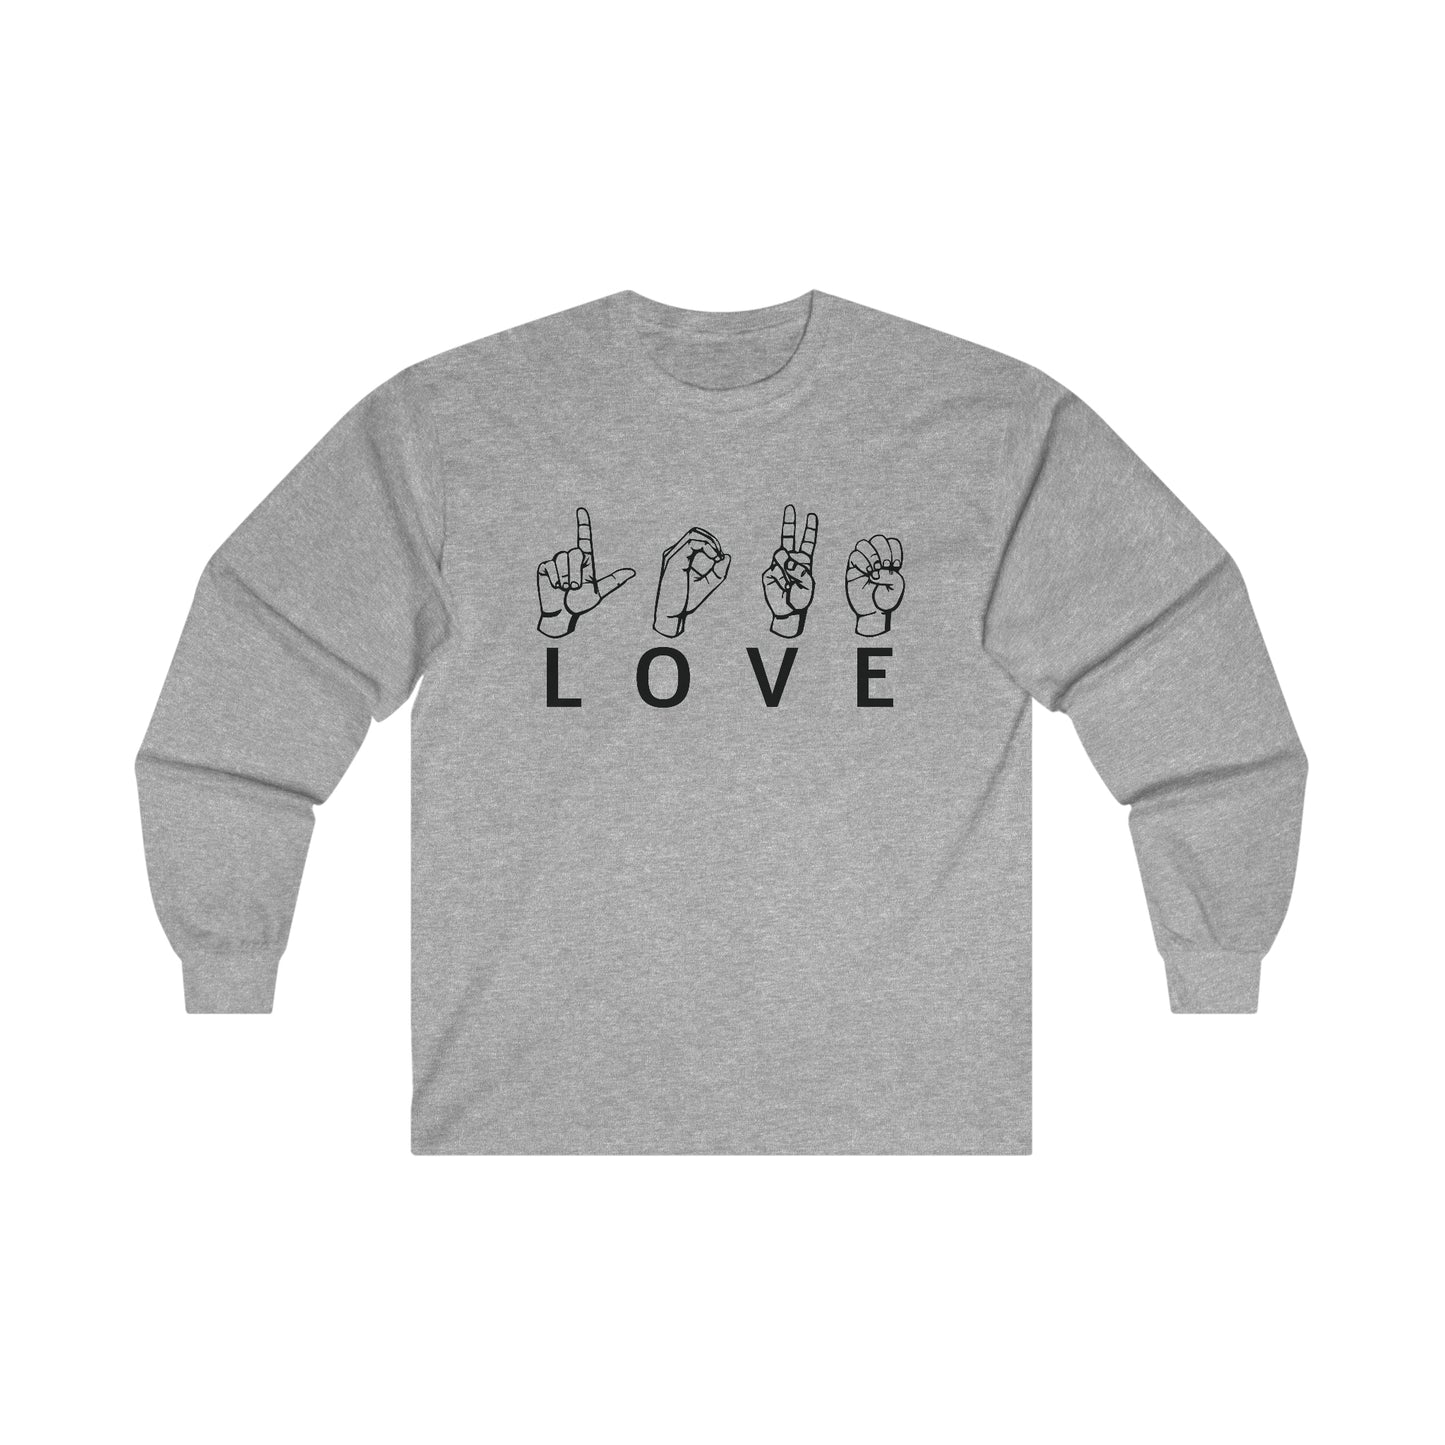 Love Sign Language Long Sleeve Shirt